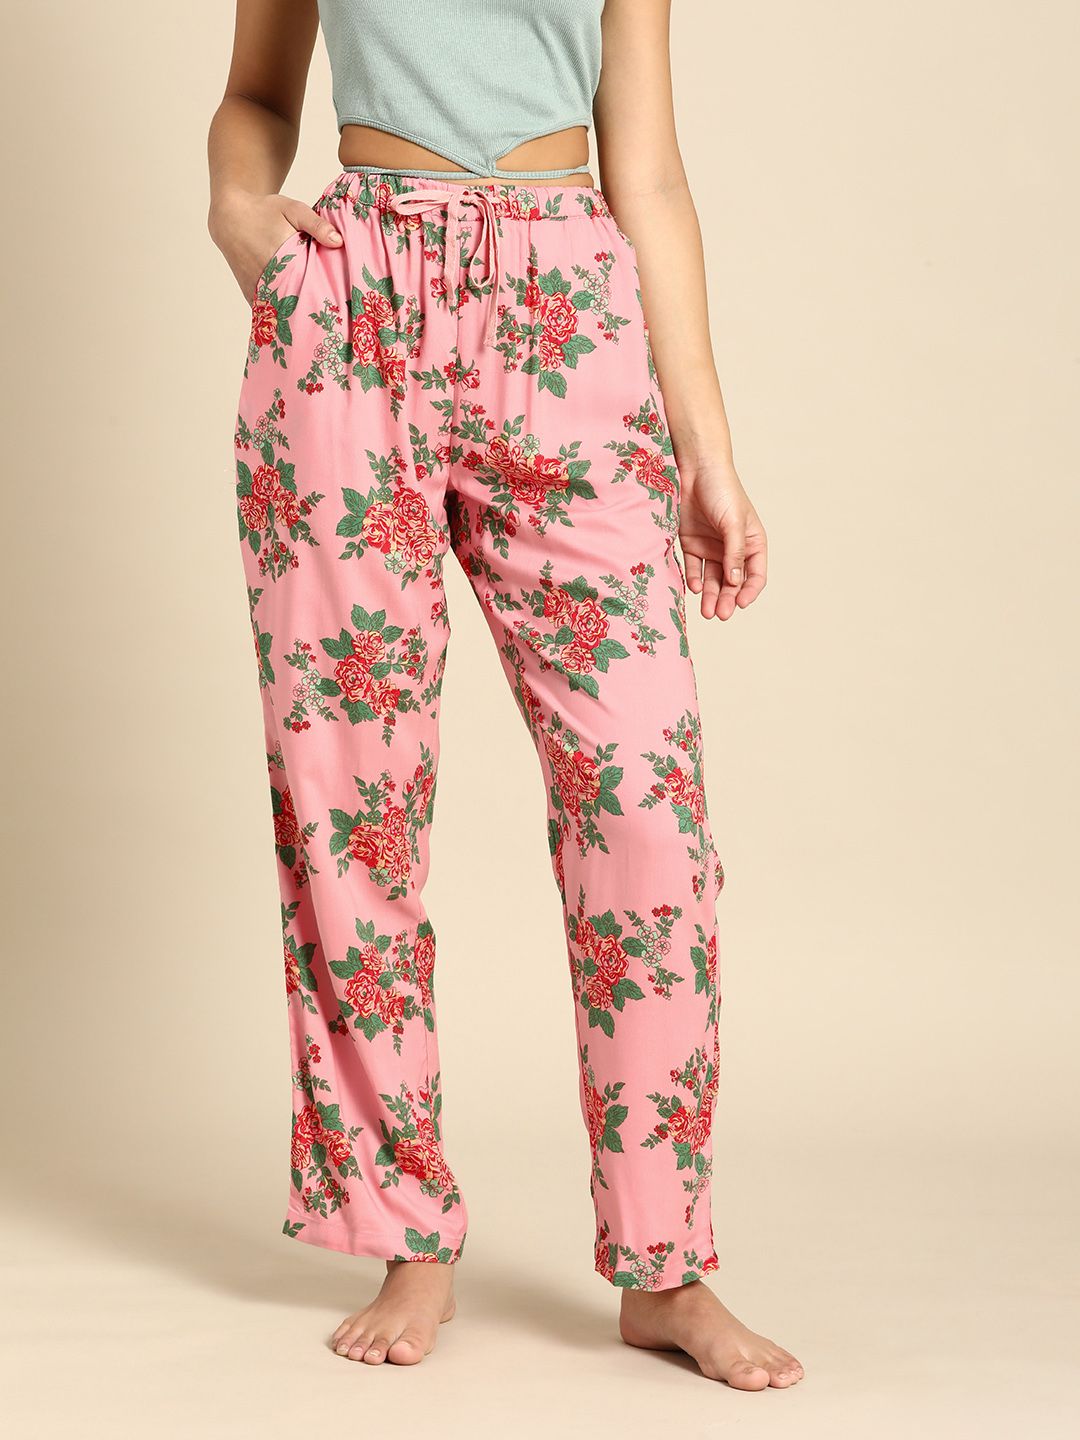 Dreamz by Pantaloons Women Pink & Green Printed Lounge Pants Price in India